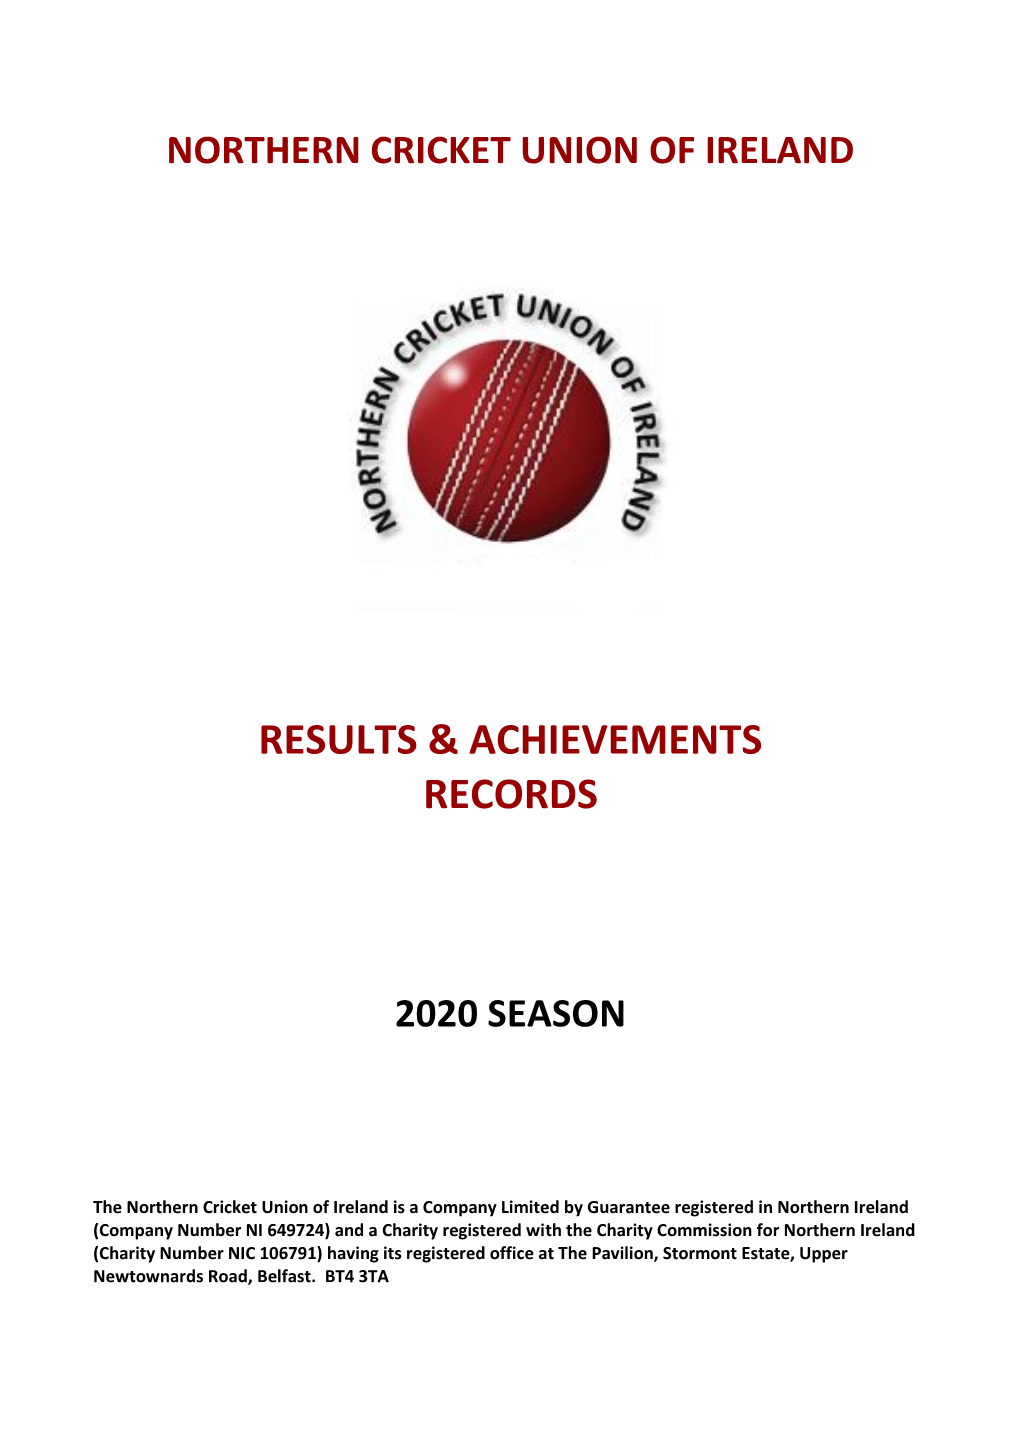 Results & Achievements Records